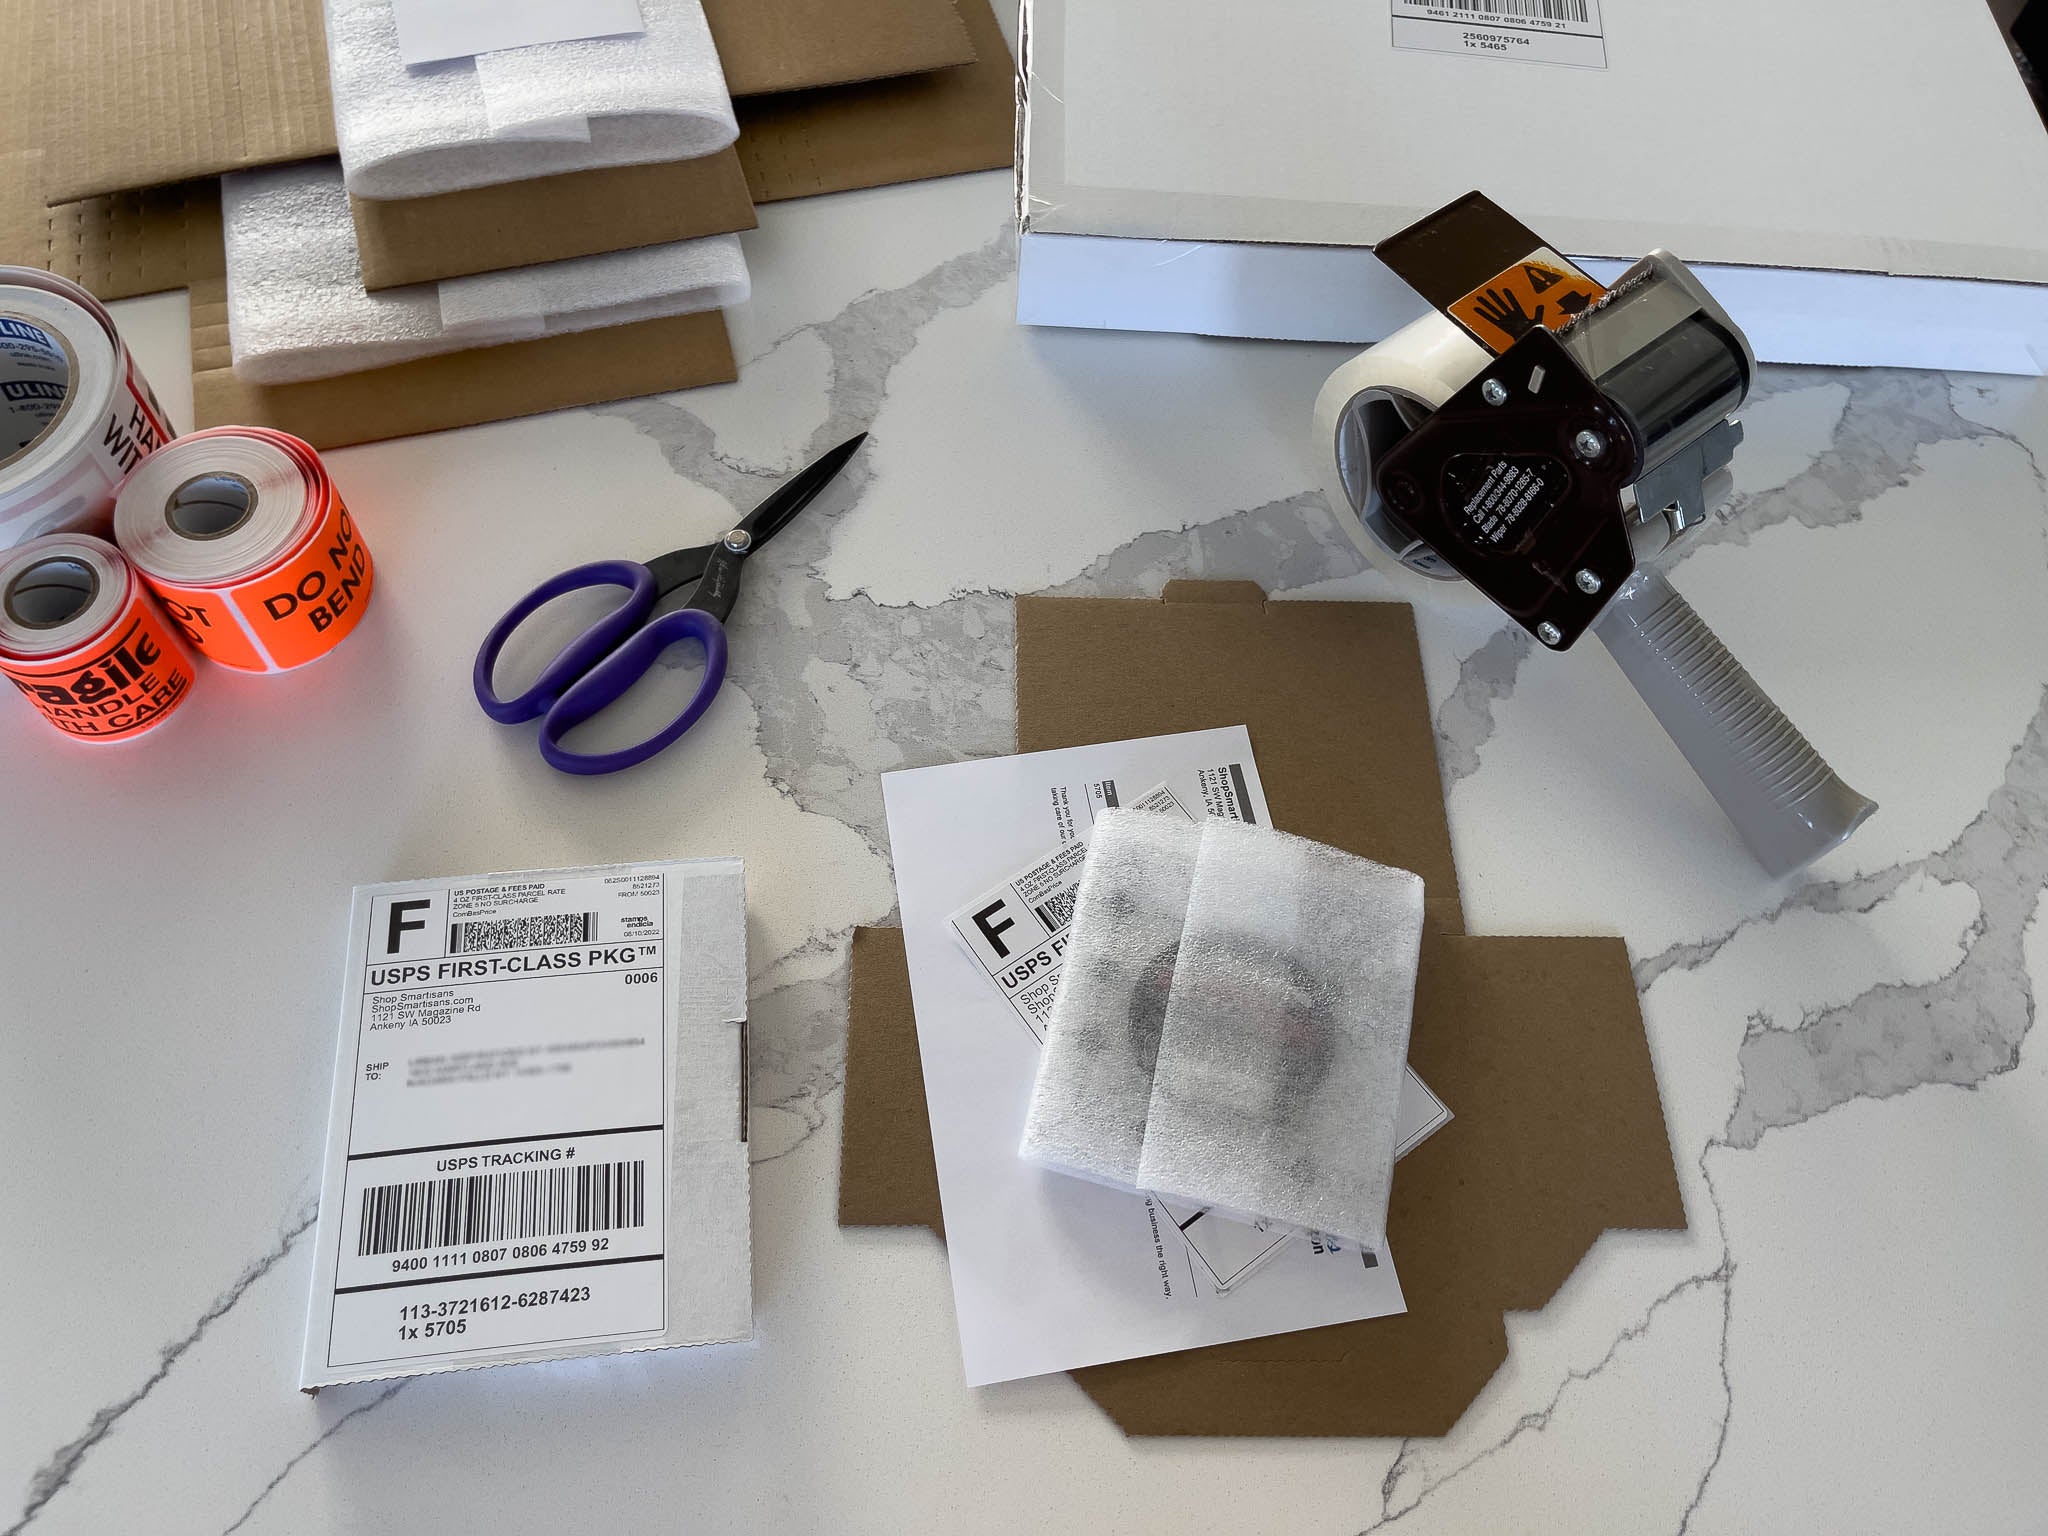 Smartisans shipments in progress, custom boxes, stickers, foam, scissors, packing tape